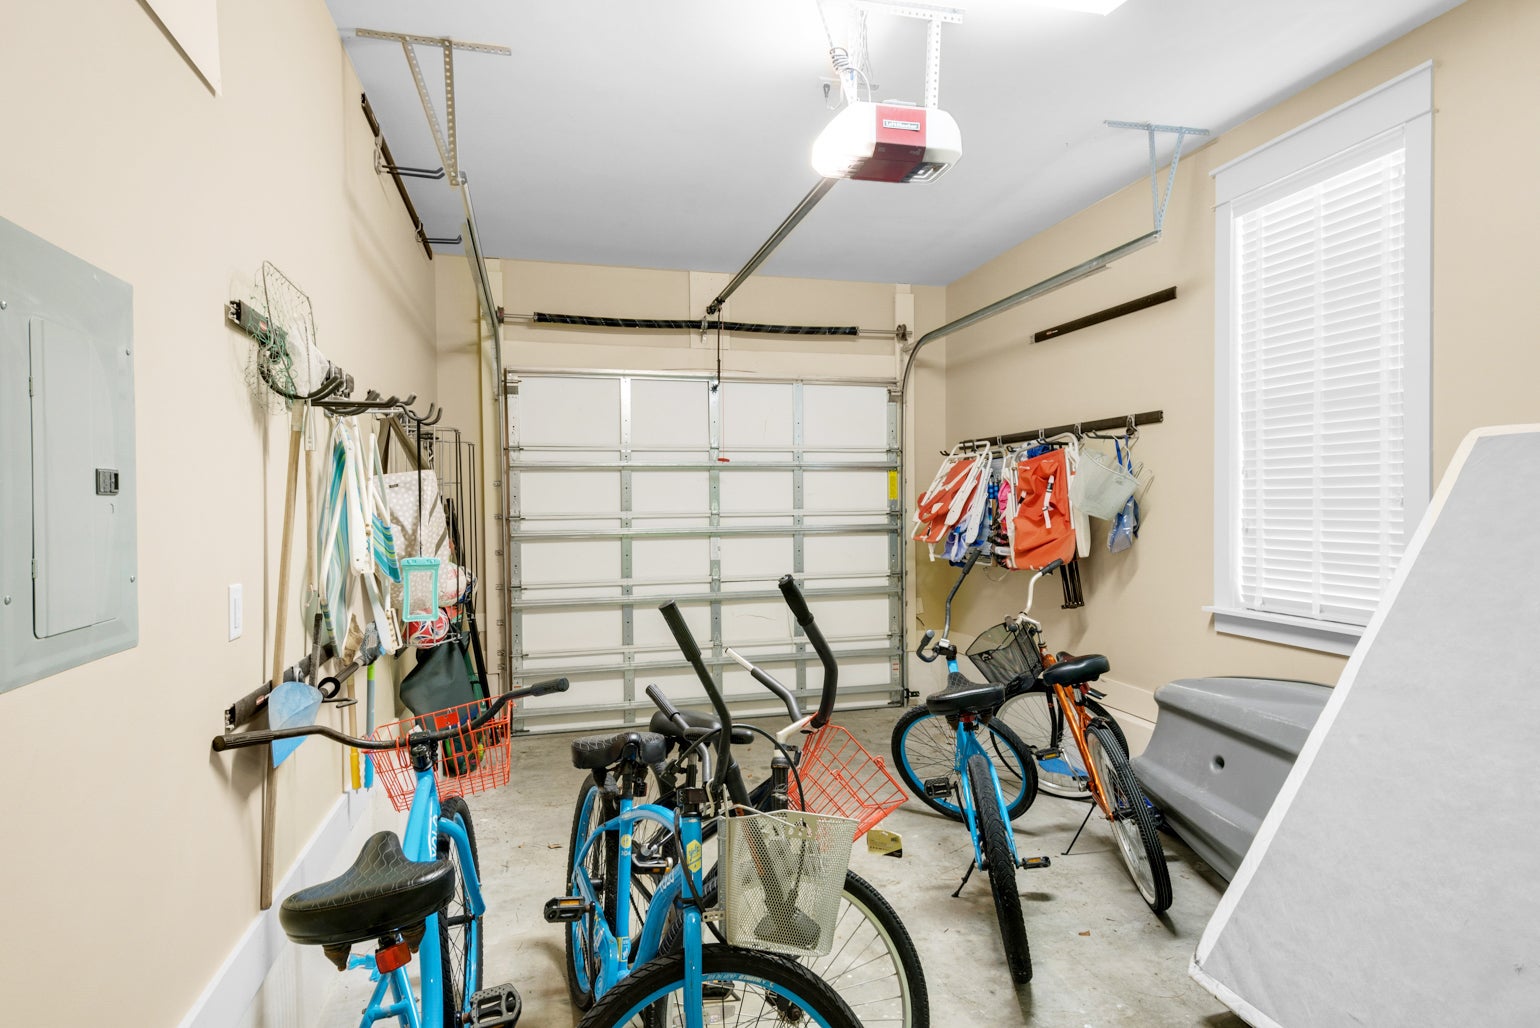 Bikes stored in the garage